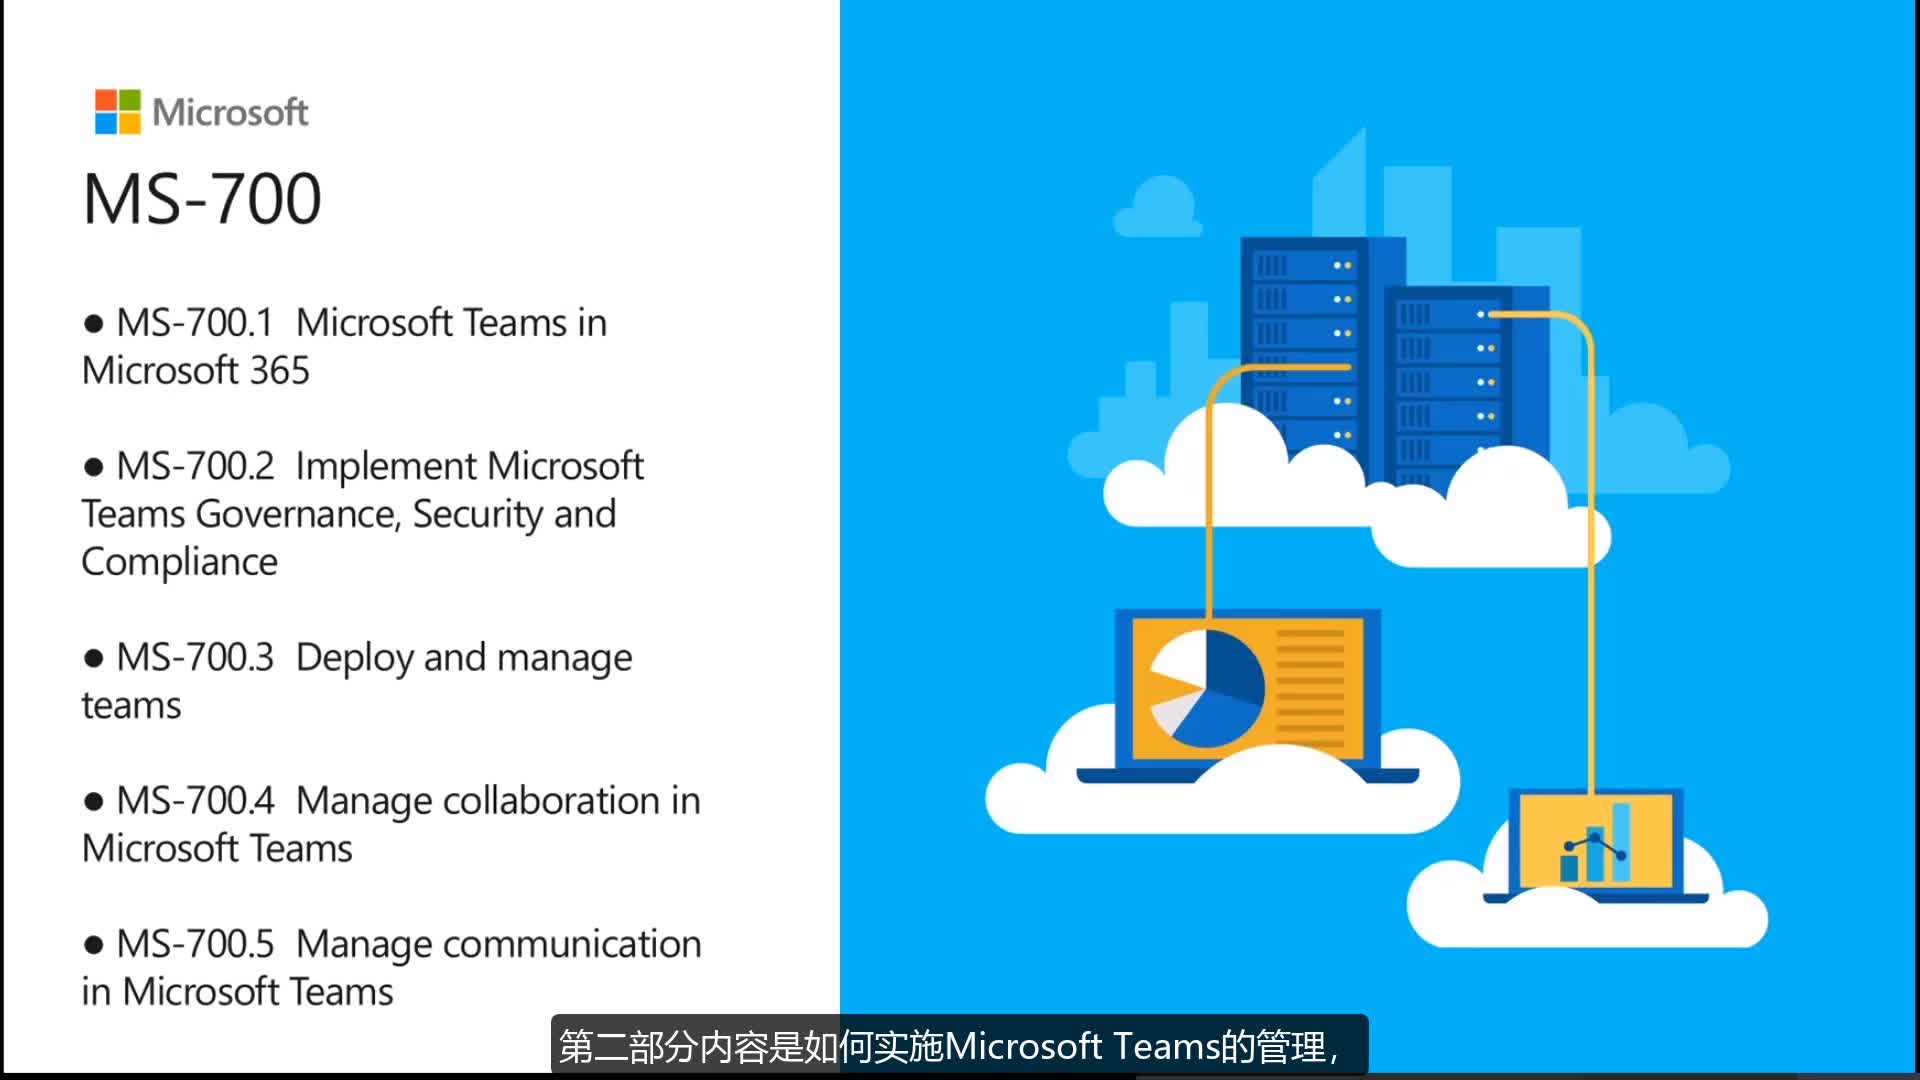 MS-700：管理Microsoft Teams